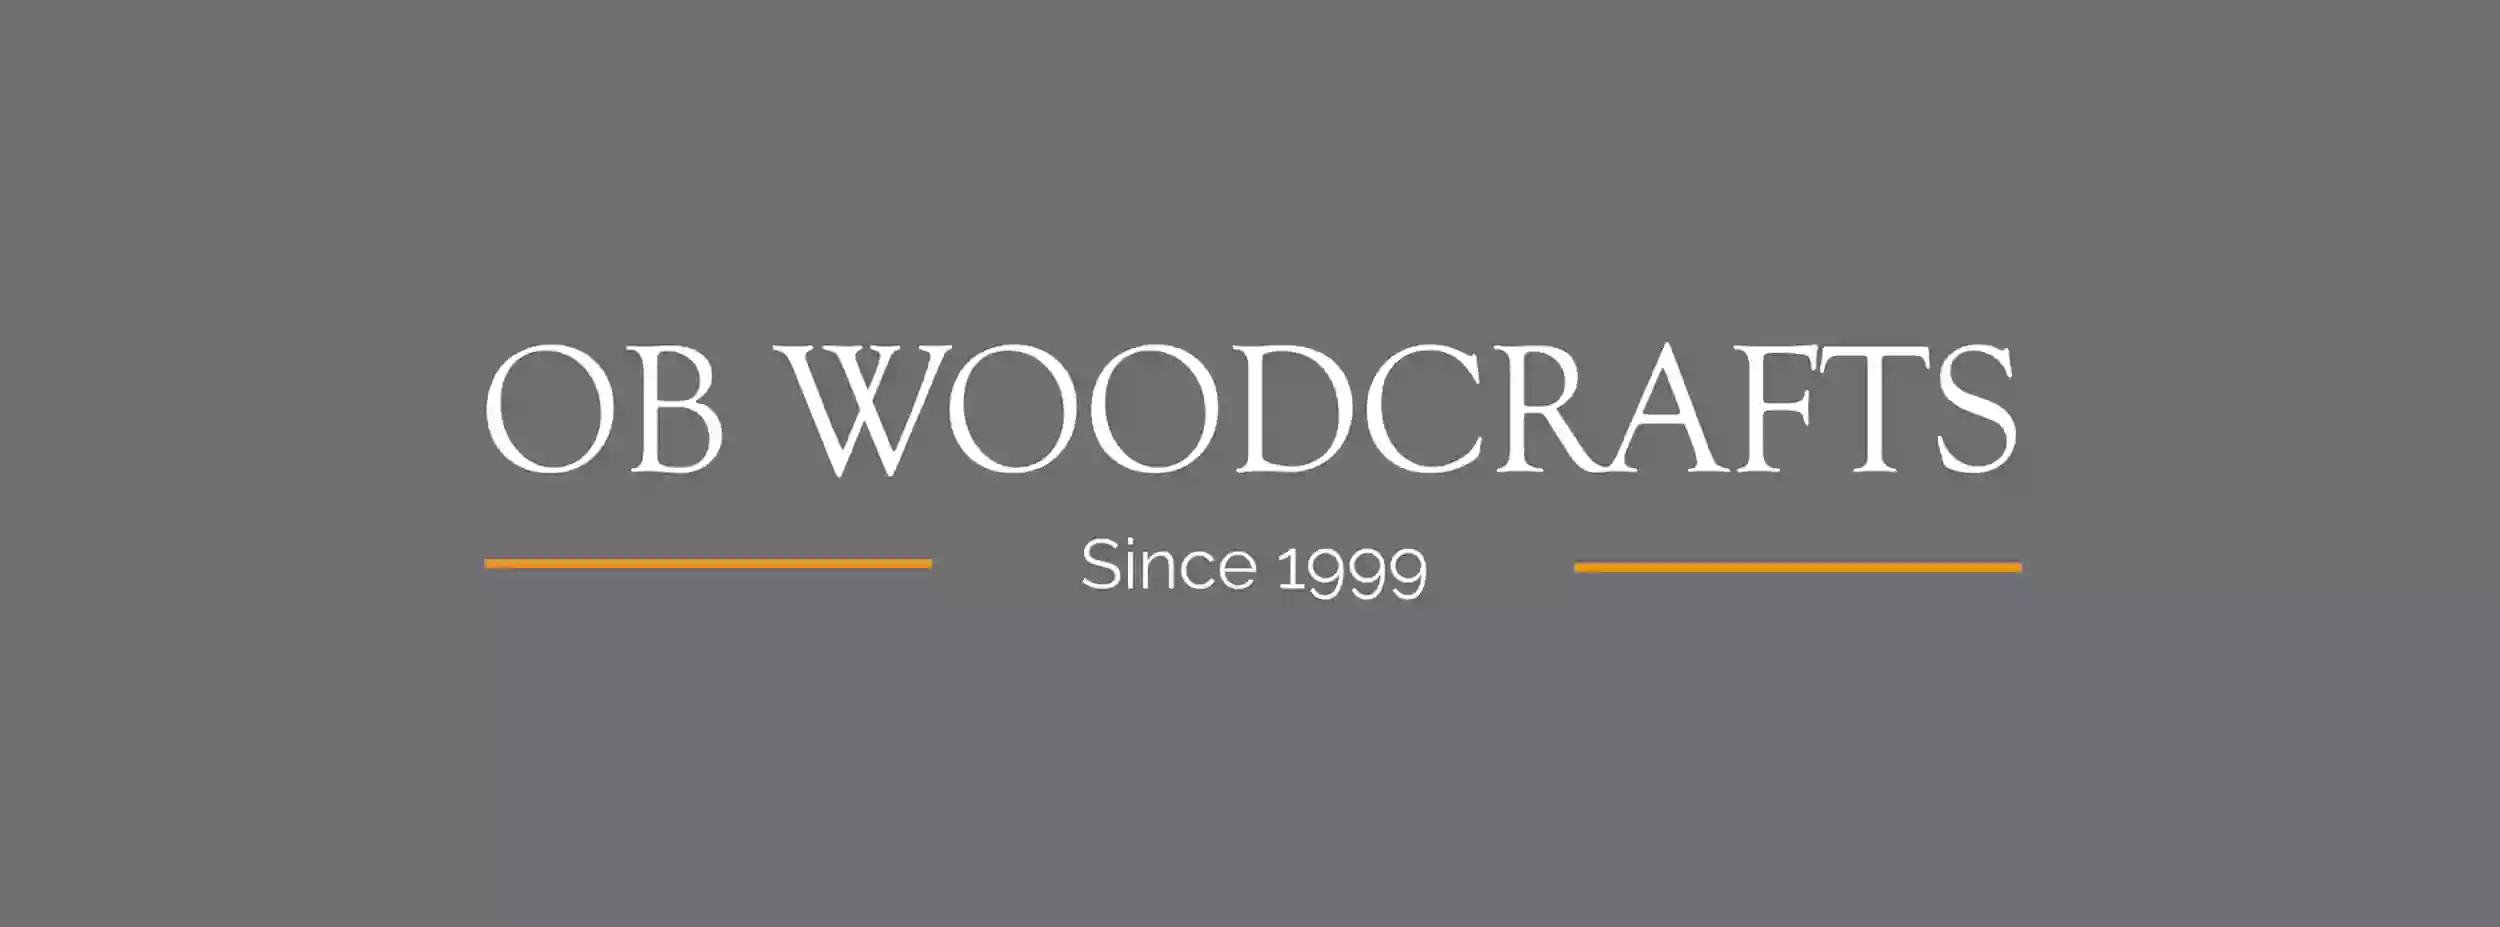 OB Woodcrafts Limited